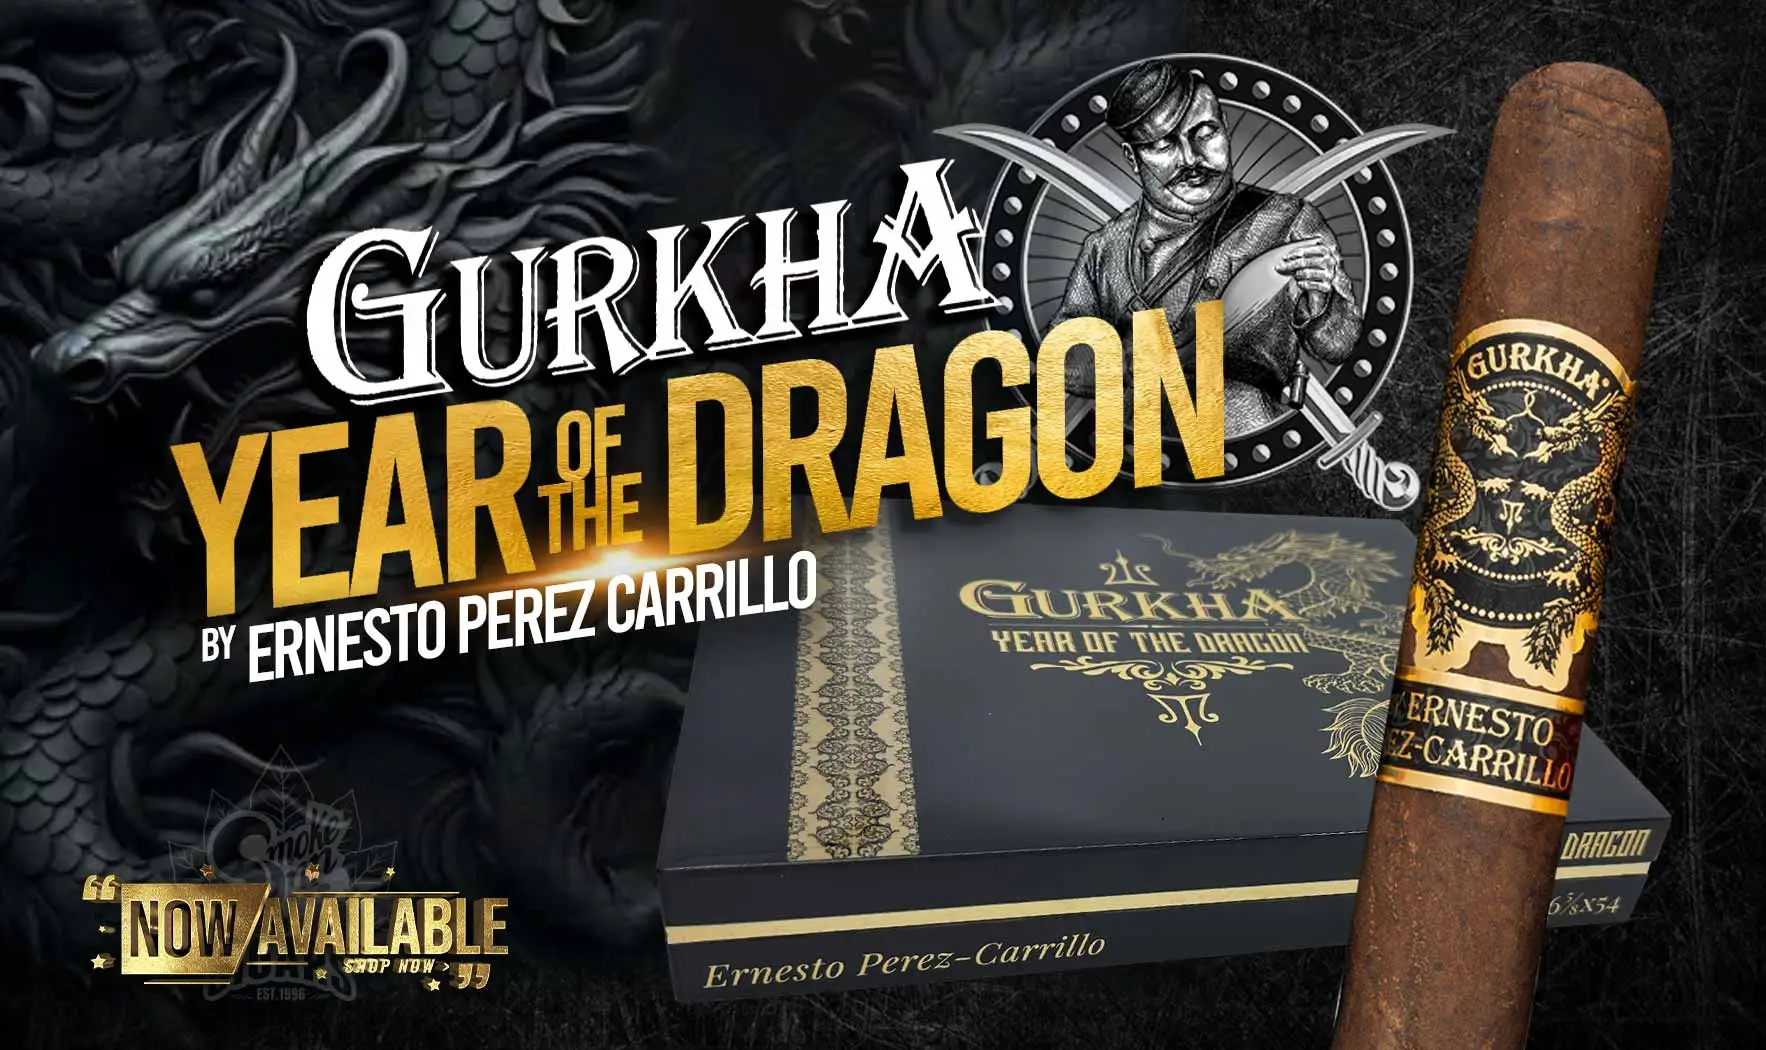  Gurkha Year of the Dragon by E.P. Carillo